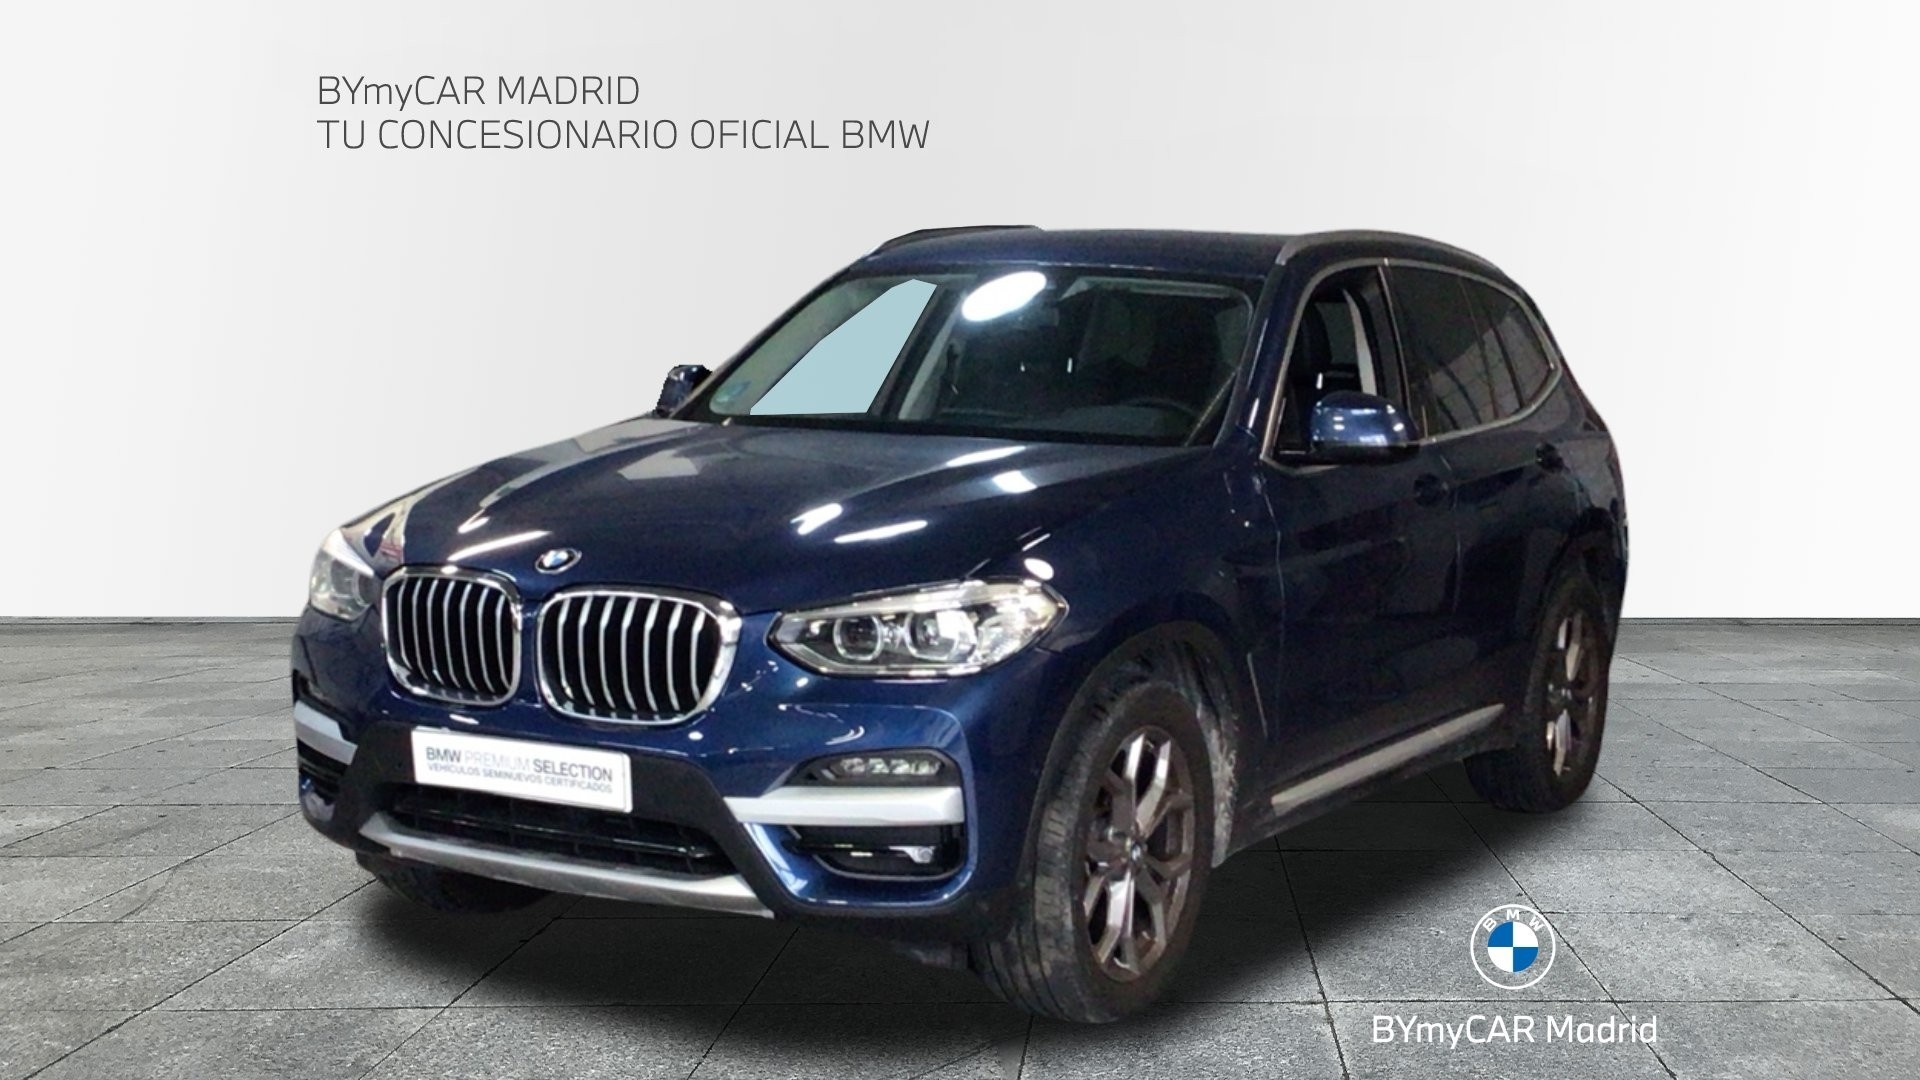 BMW X3 xDrive20d 140 kW (190 CV) Vehículo usado en Madrid